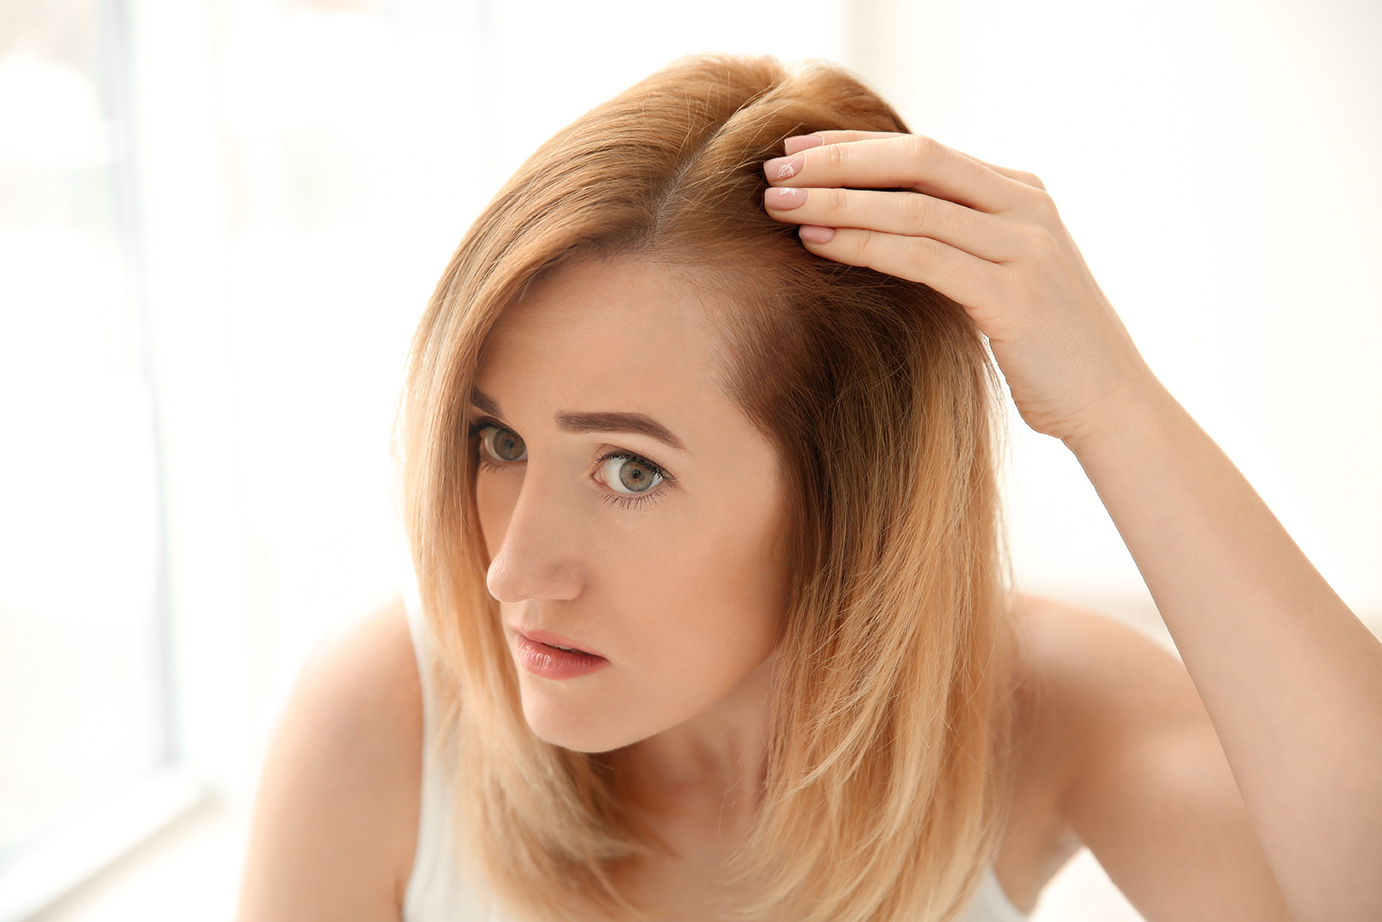 BioRestore Women's Hair Loss Solutions